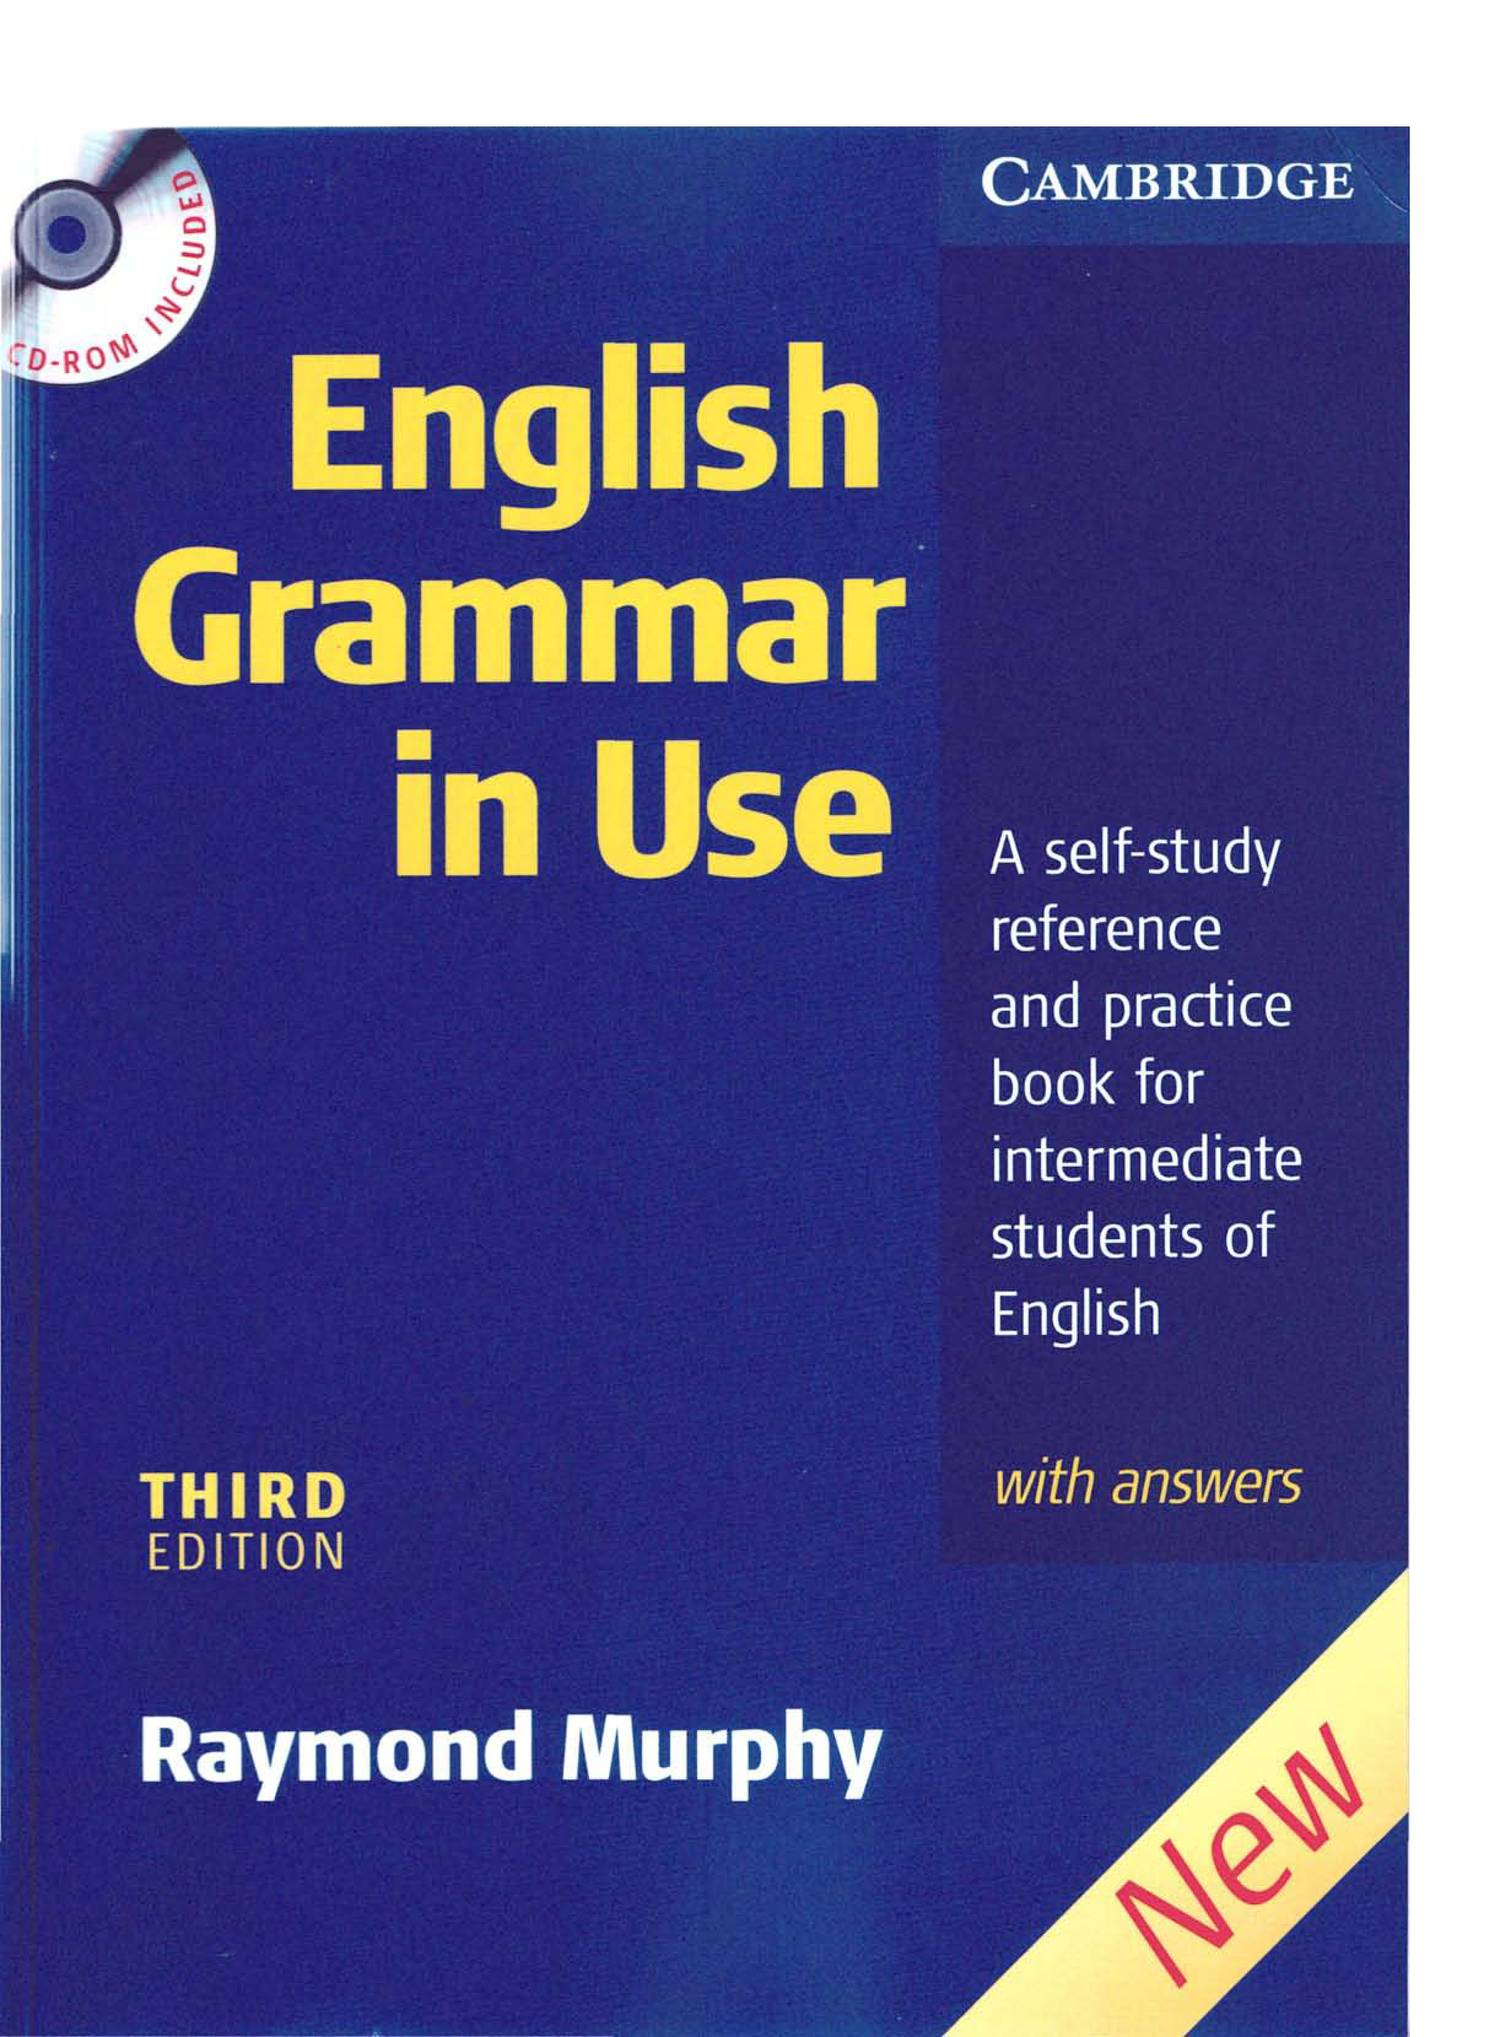 essential grammar in use pdf download